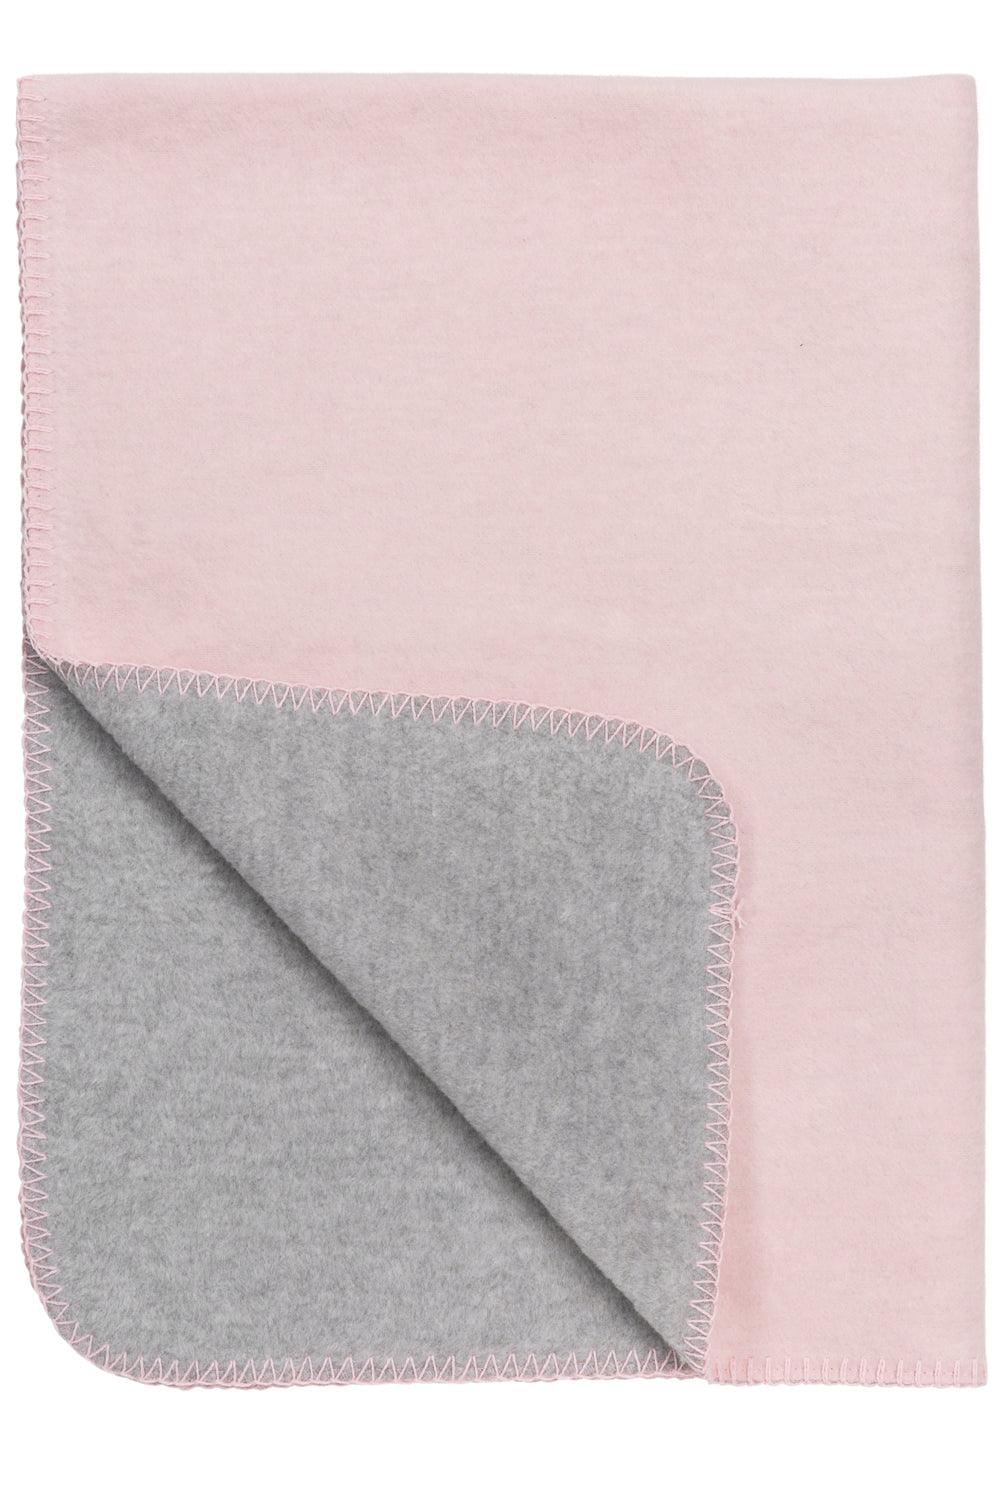 Cot Bed Blanket - Pink Grey Melange - 100x150cm - Mari Kali Stores Cyprus